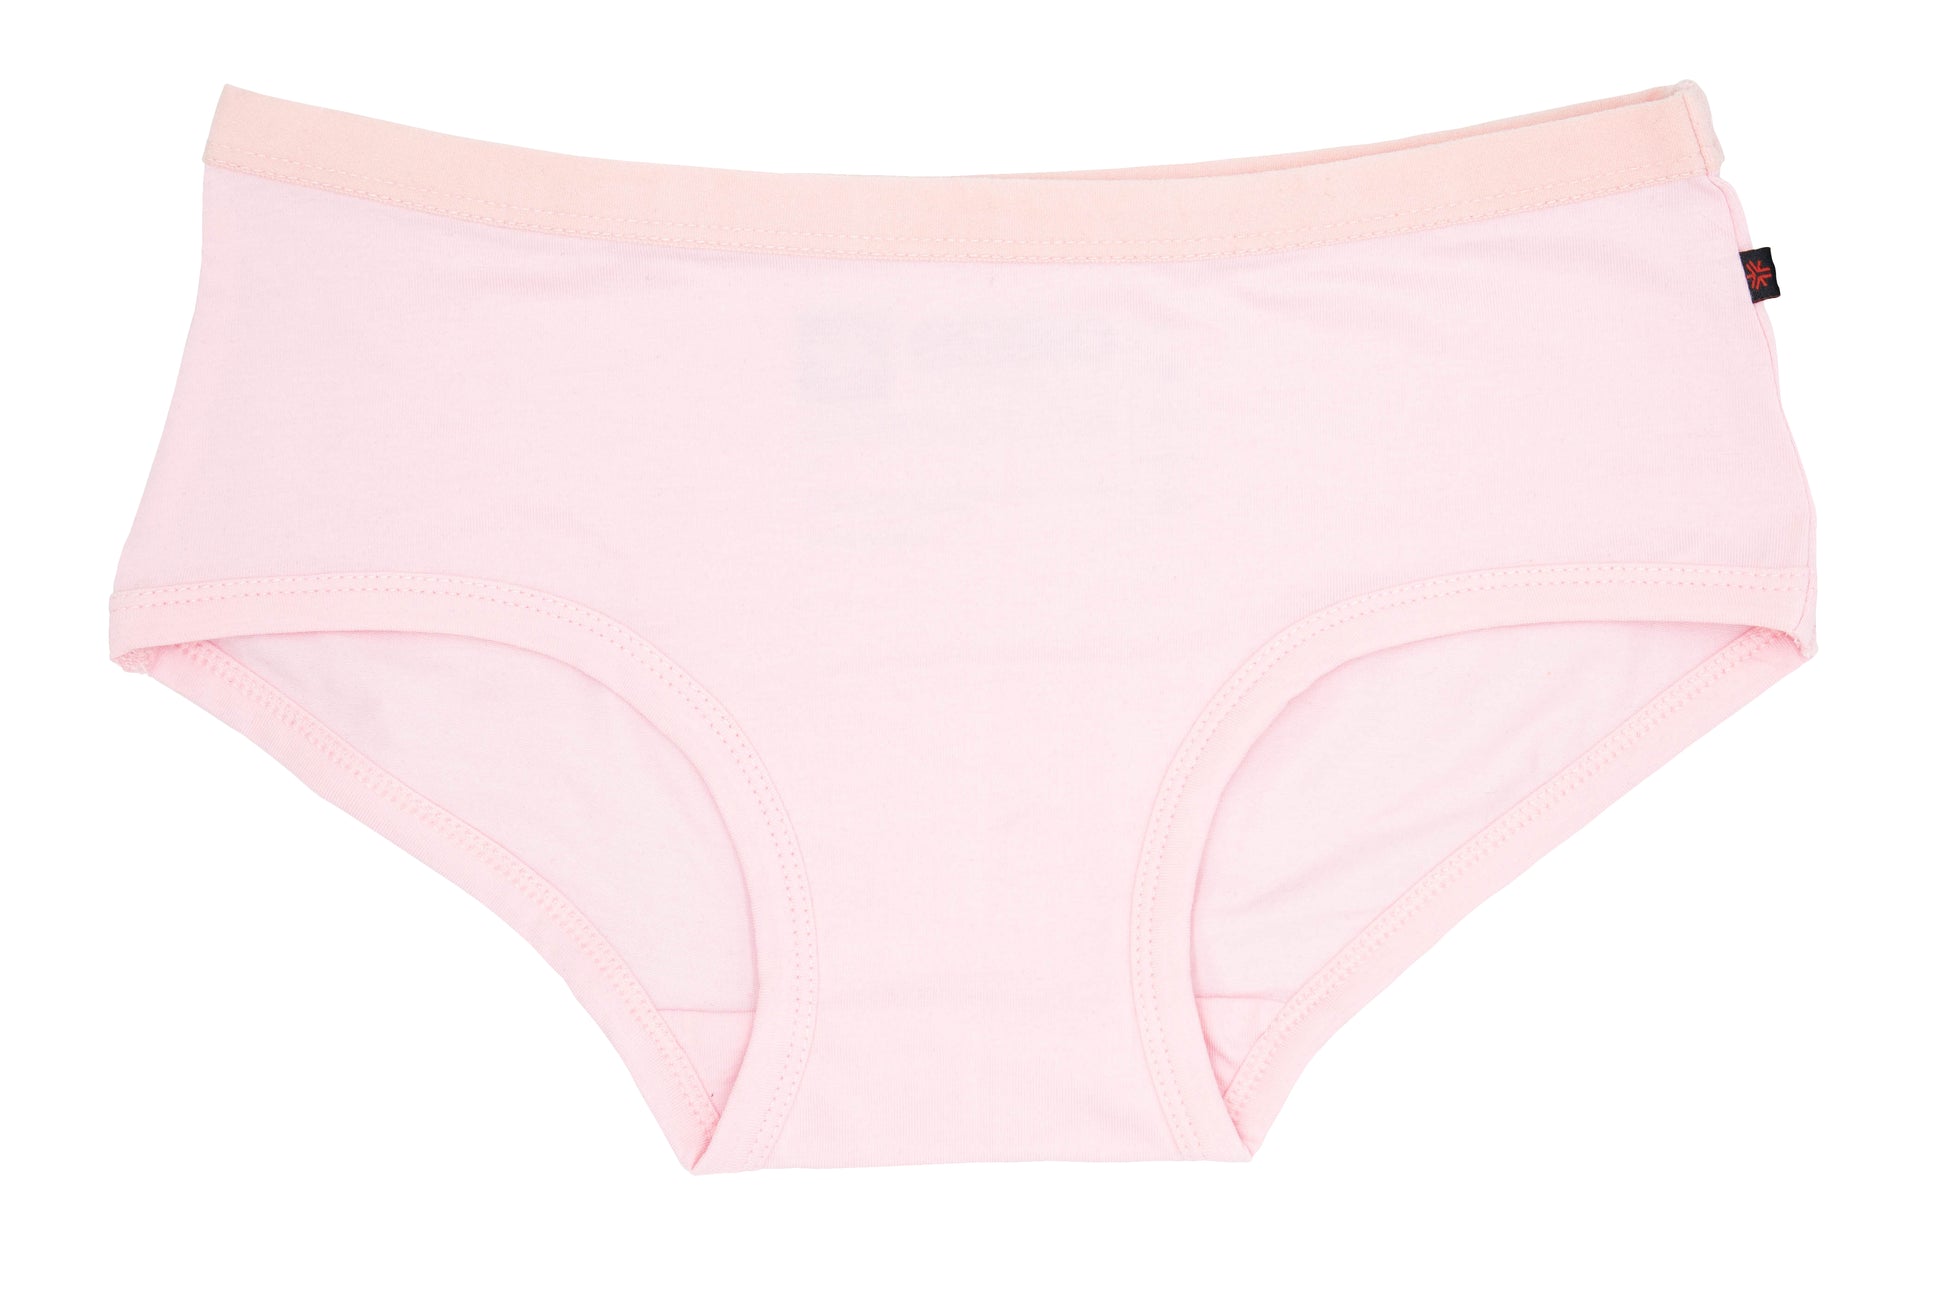 Women's organic cotton thong in light pink